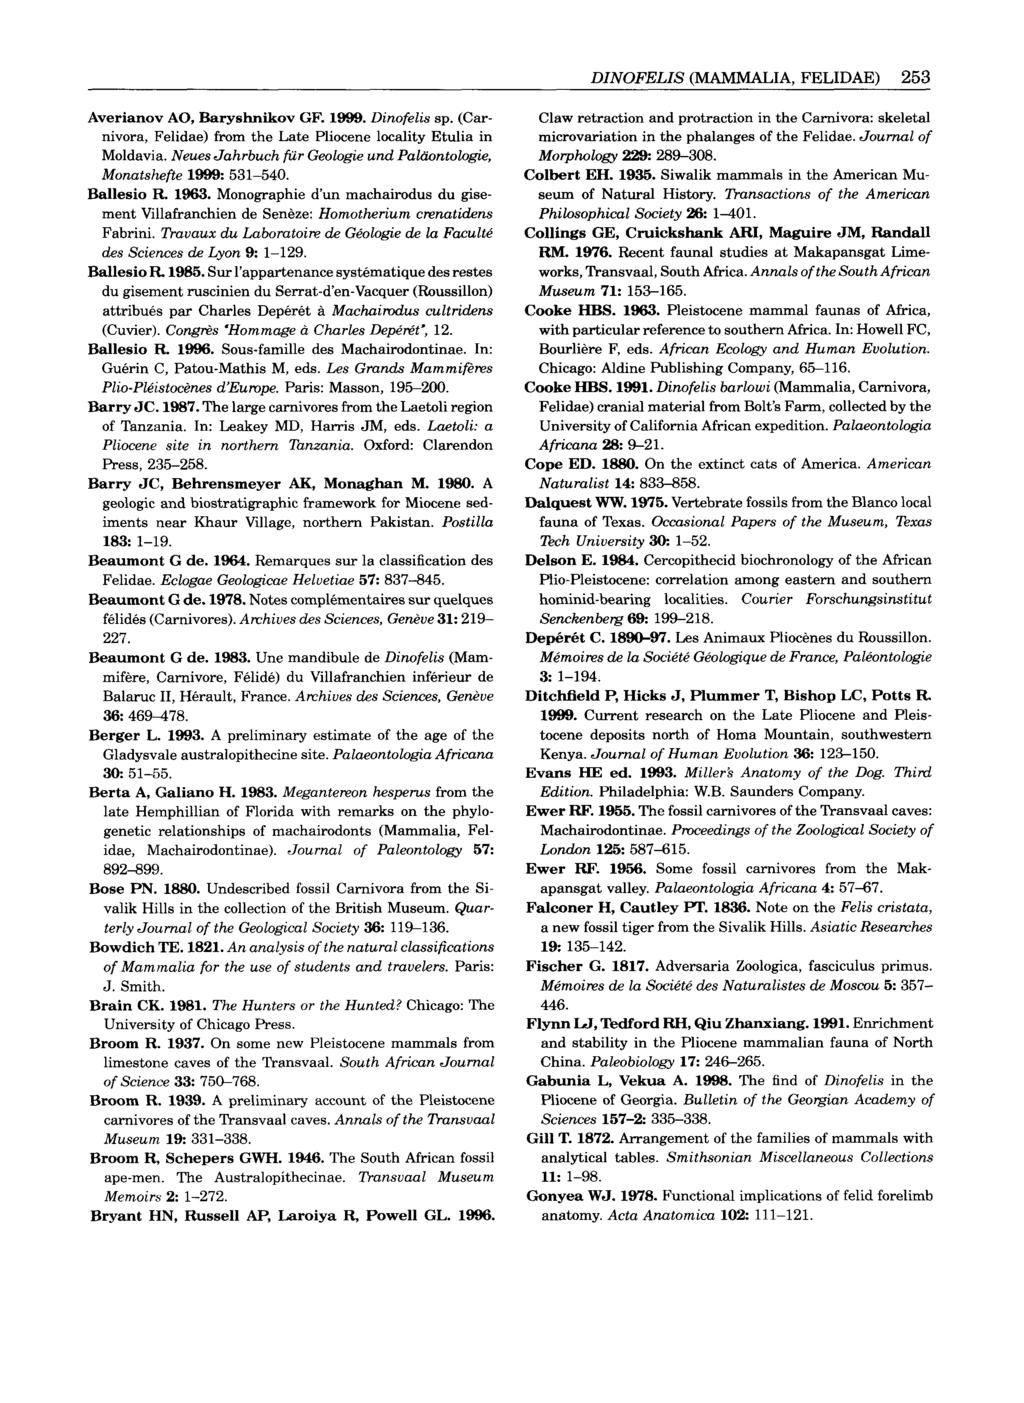 Averianov AO, Baryshnikov GF. 1999. Dinofelis sp. (Carnivora, Felidae) from the Late Pliocene locality Etulia in Moldavia. Neues Jahrbuch fur Geologie und Paliiontologie, Monatshefte 1999: 531-540.